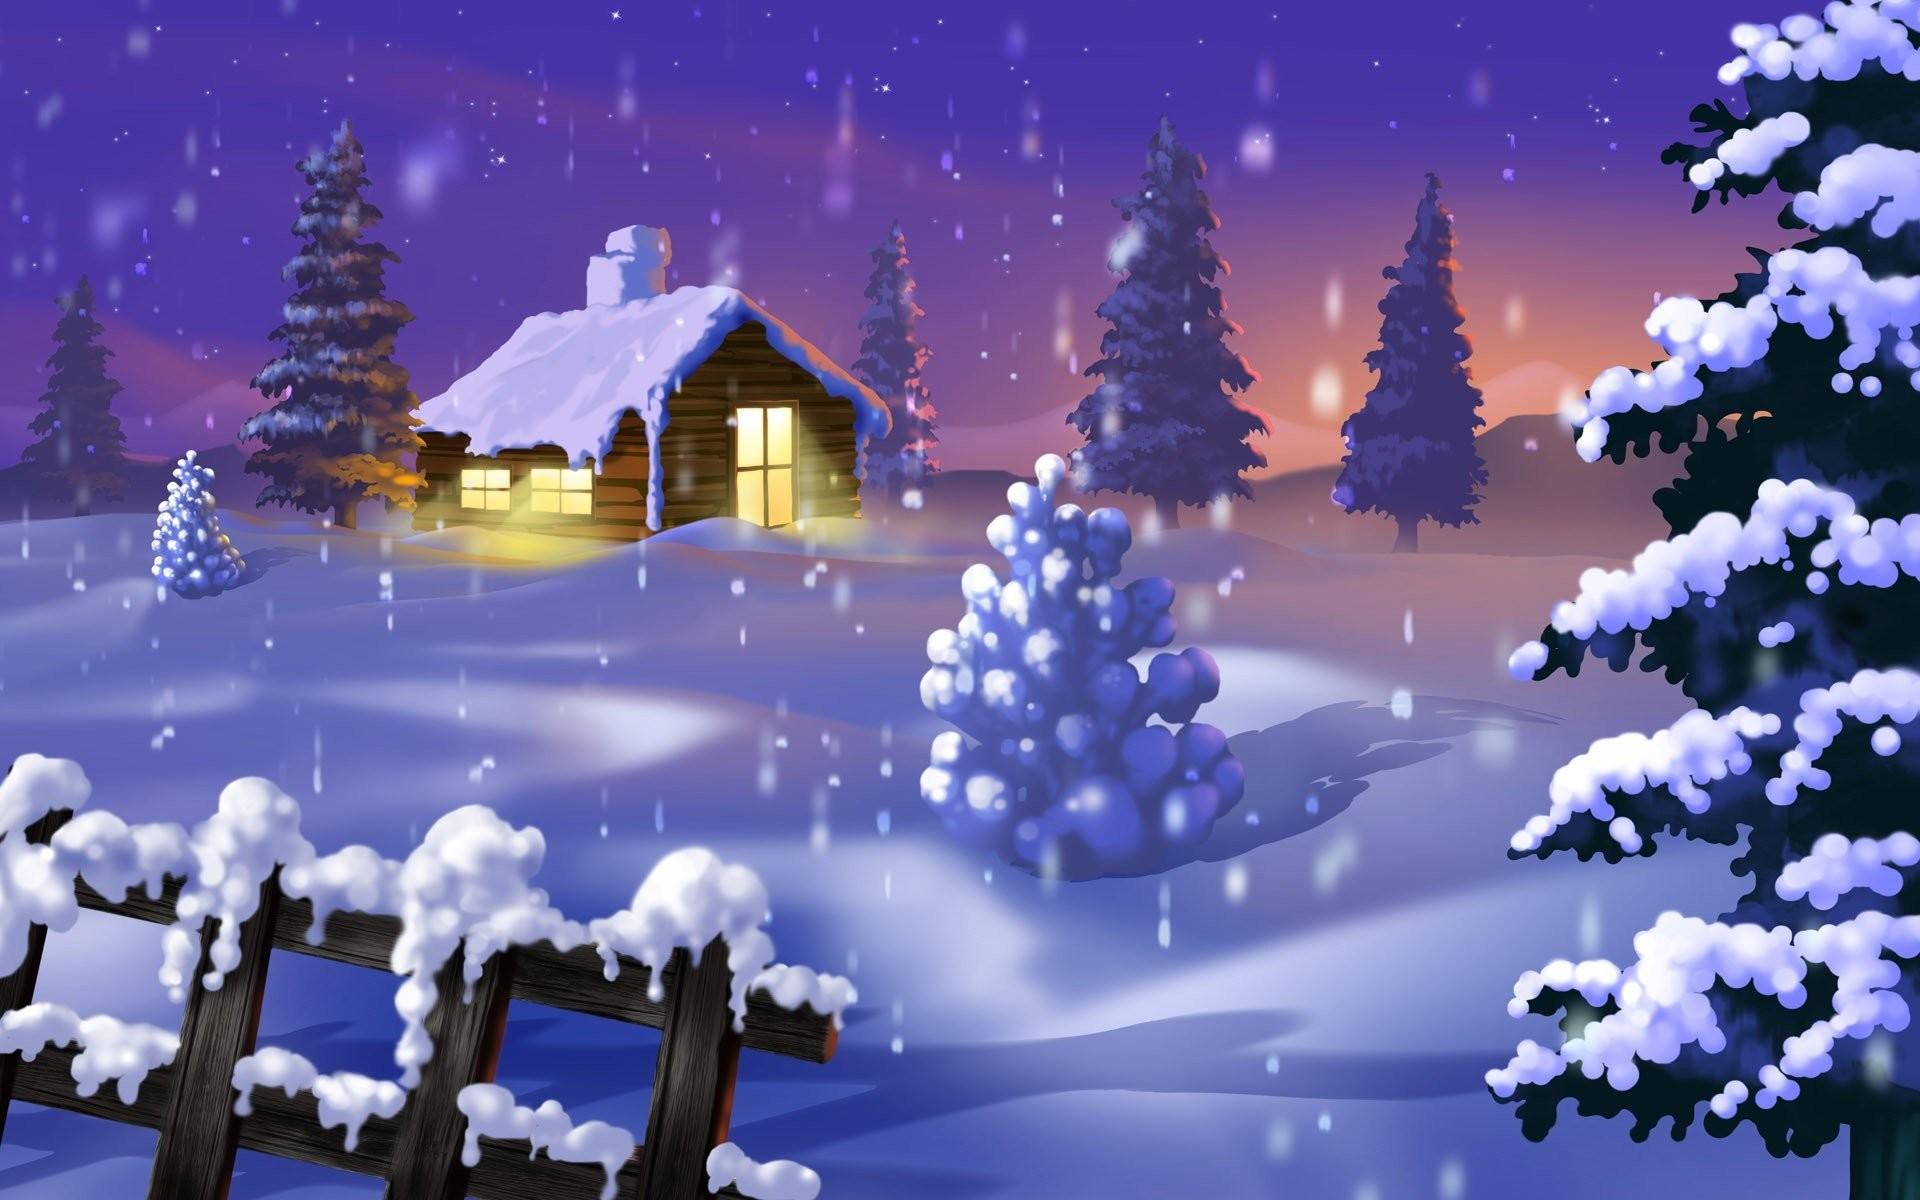 Snowy Christmas Wallpaper